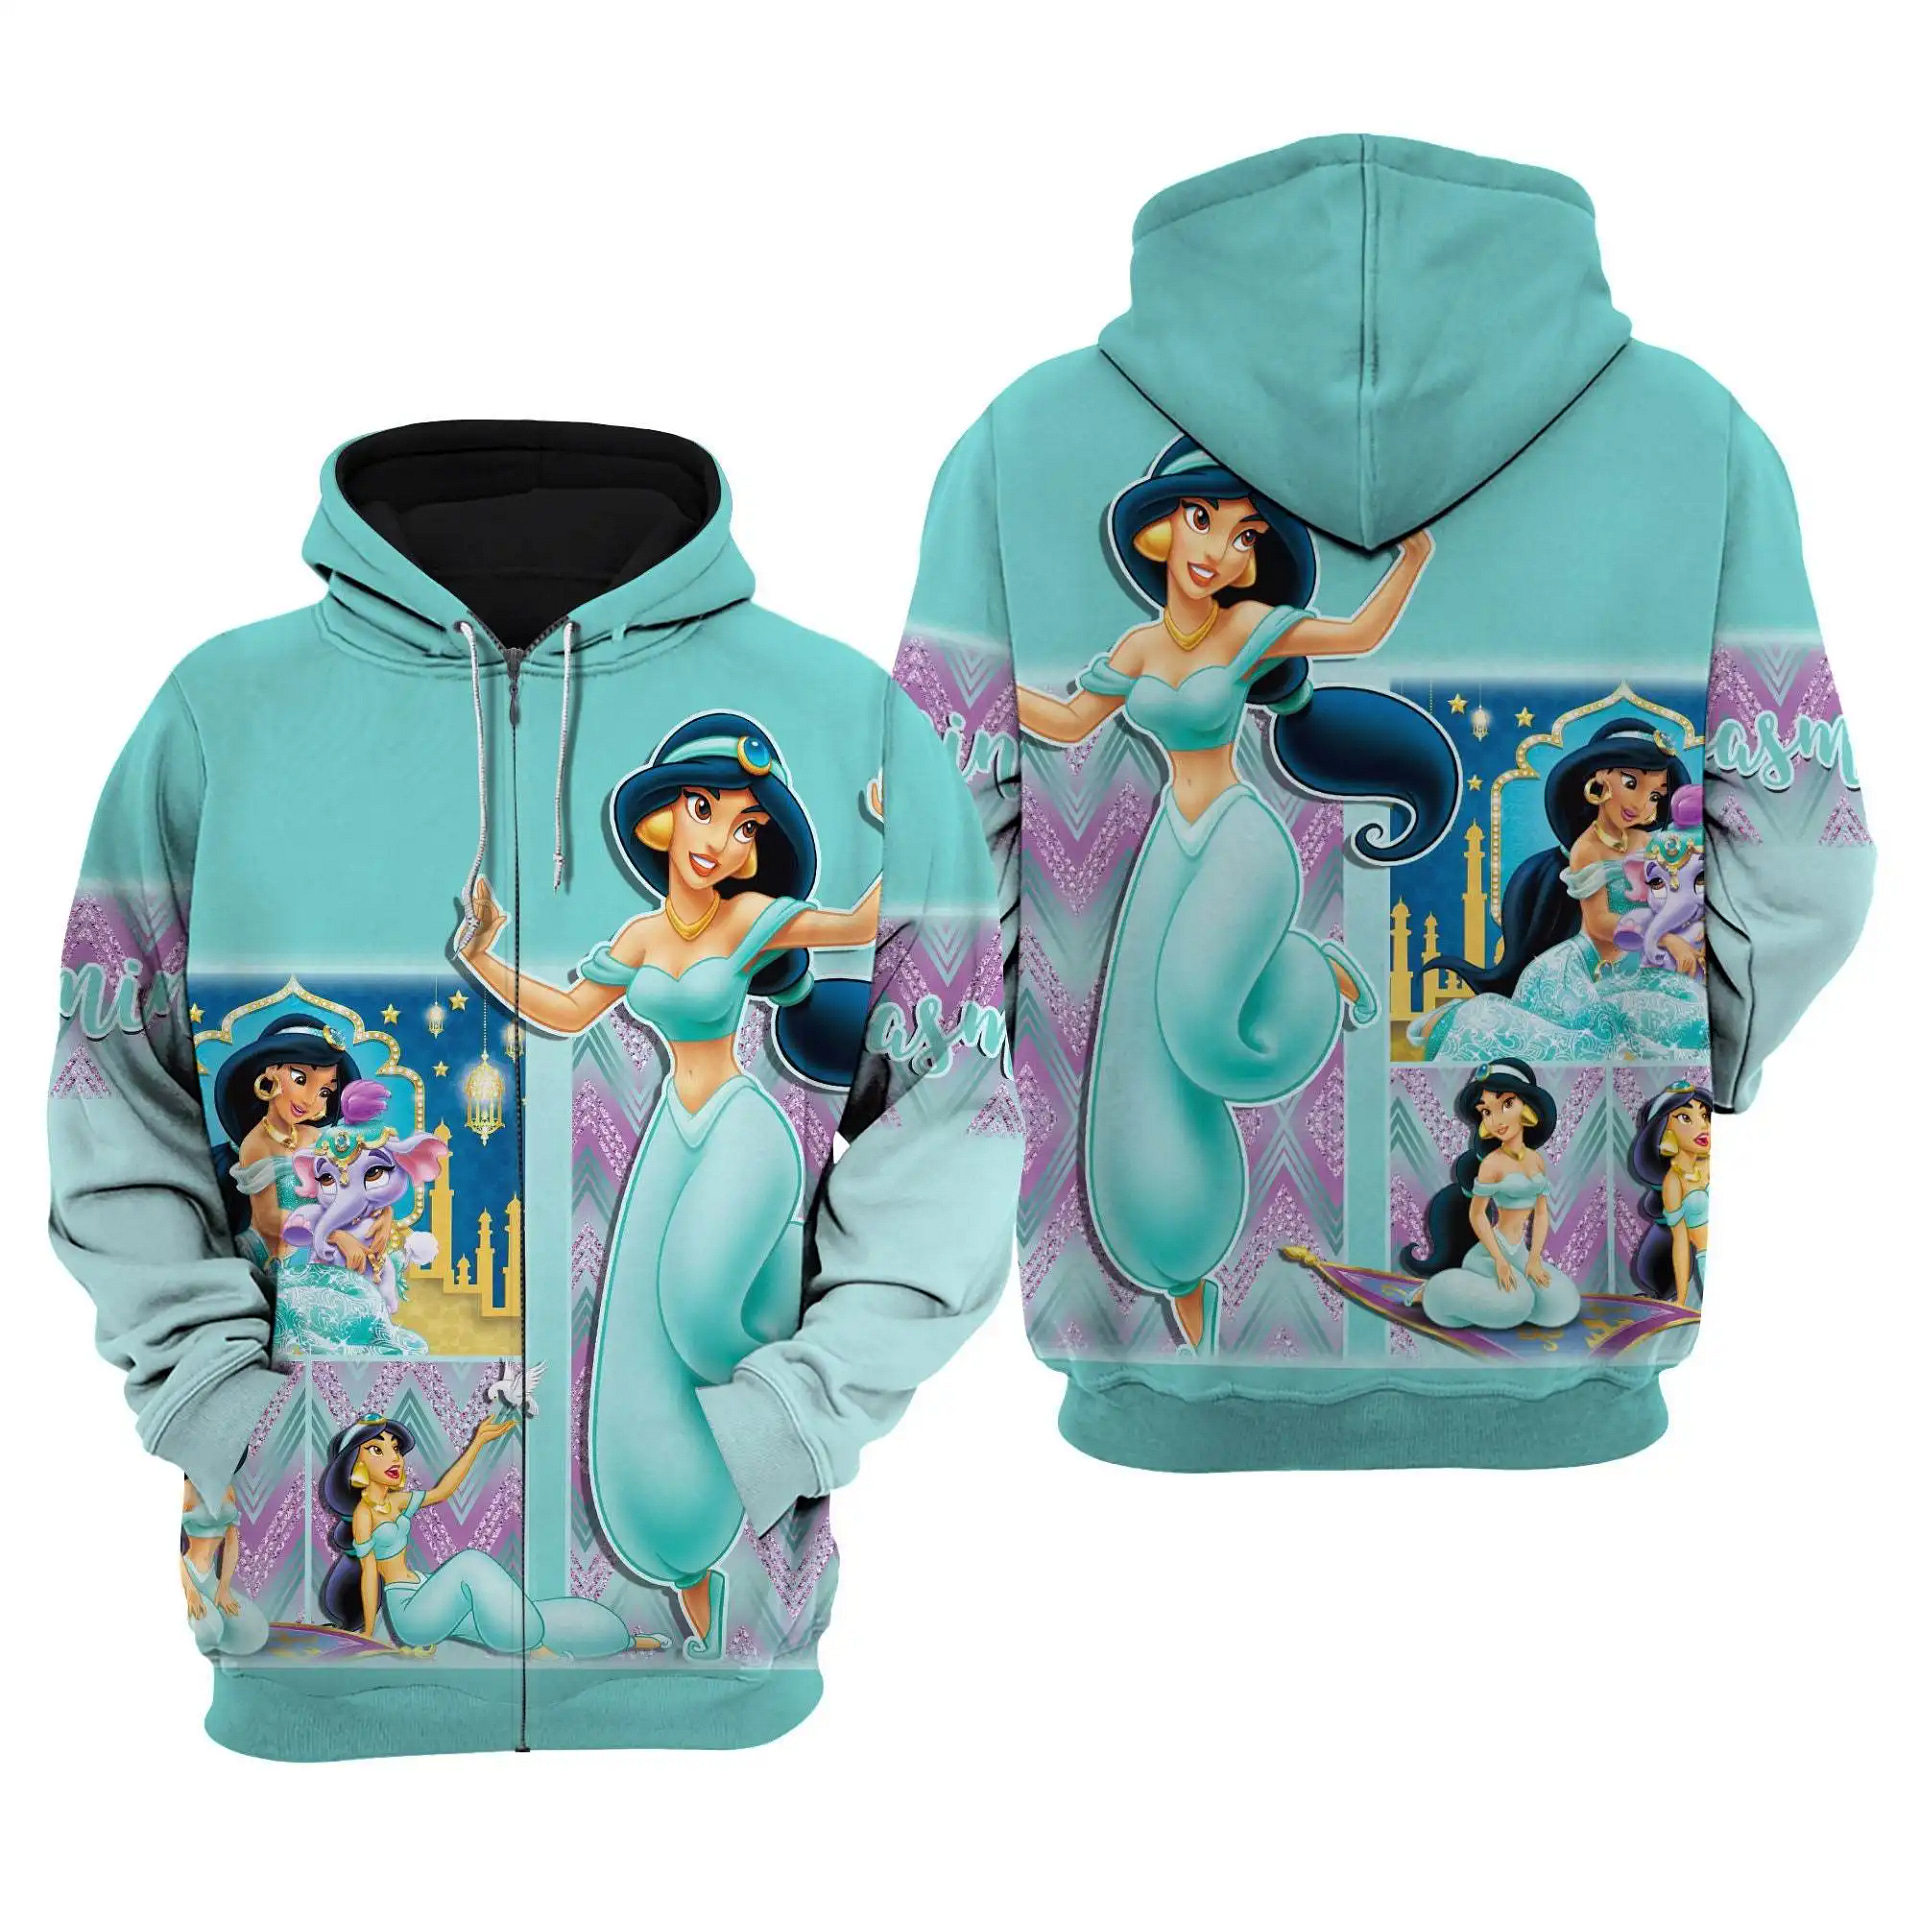 Jasmine Aladdin Disney Princess Disney Graphic Cartoon Outfit Clothing Men Women Kids Toddlers Hoodie 3D